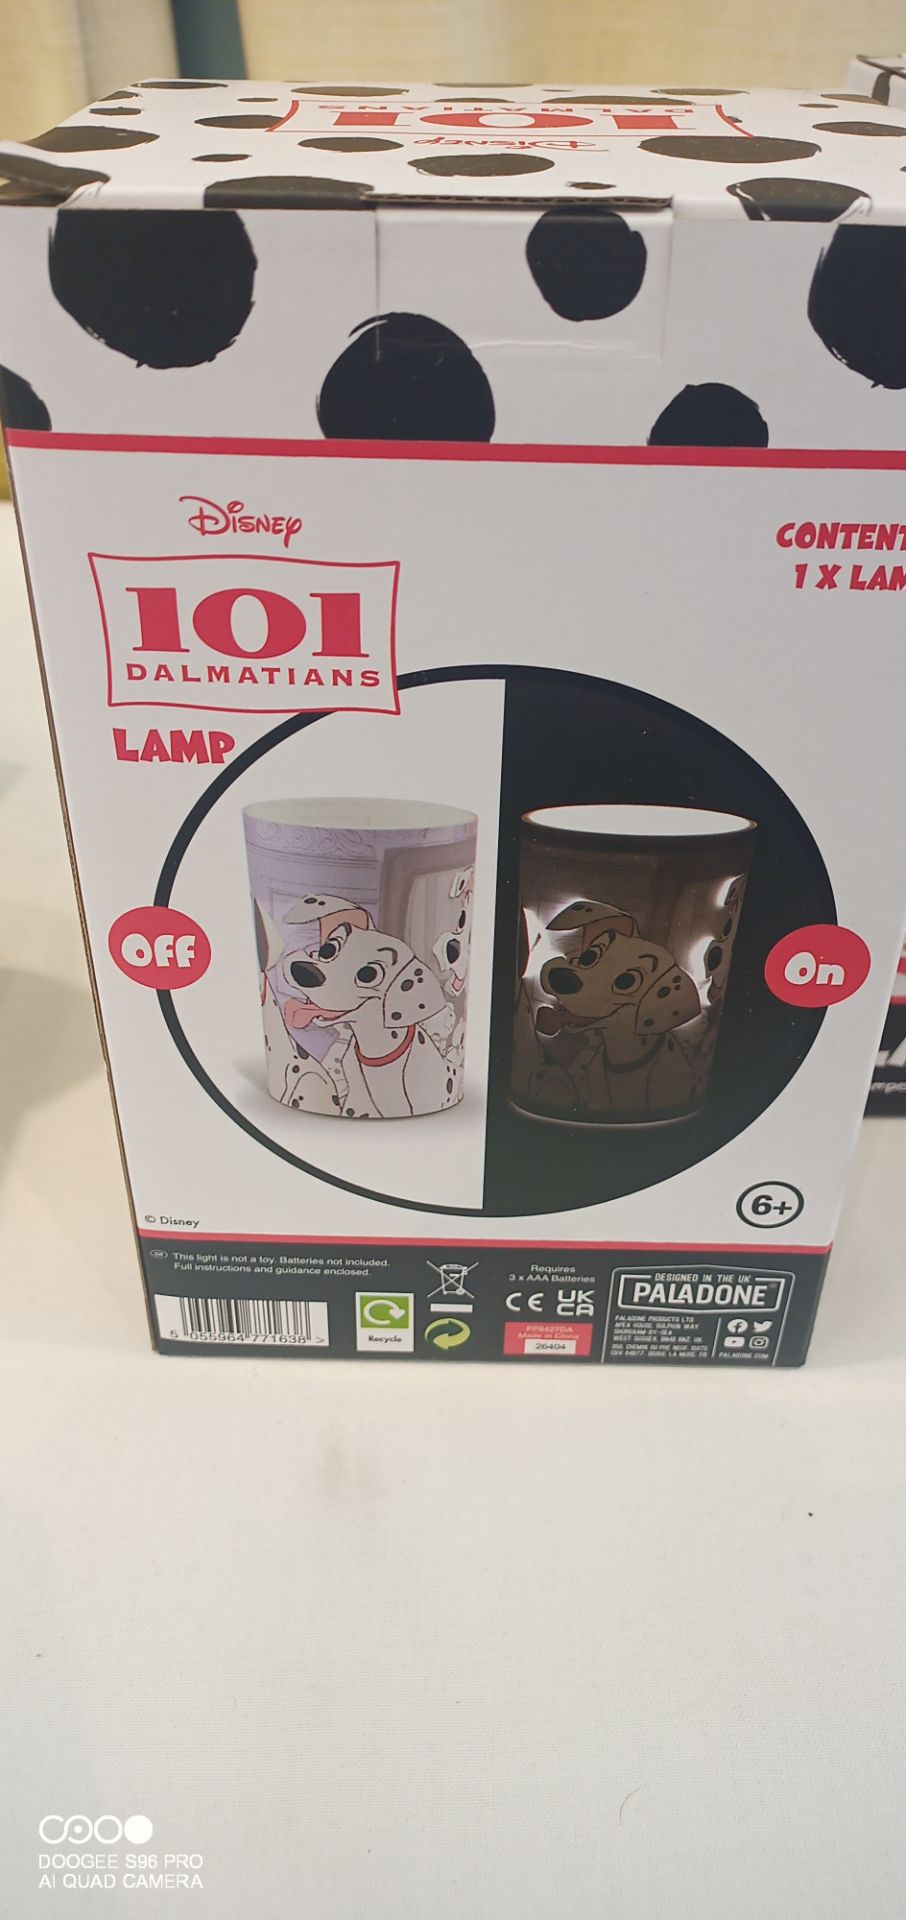 10 x 3D Effect Disney 101 Dalmatians Lamps | Total RRP £170 - Image 2 of 2